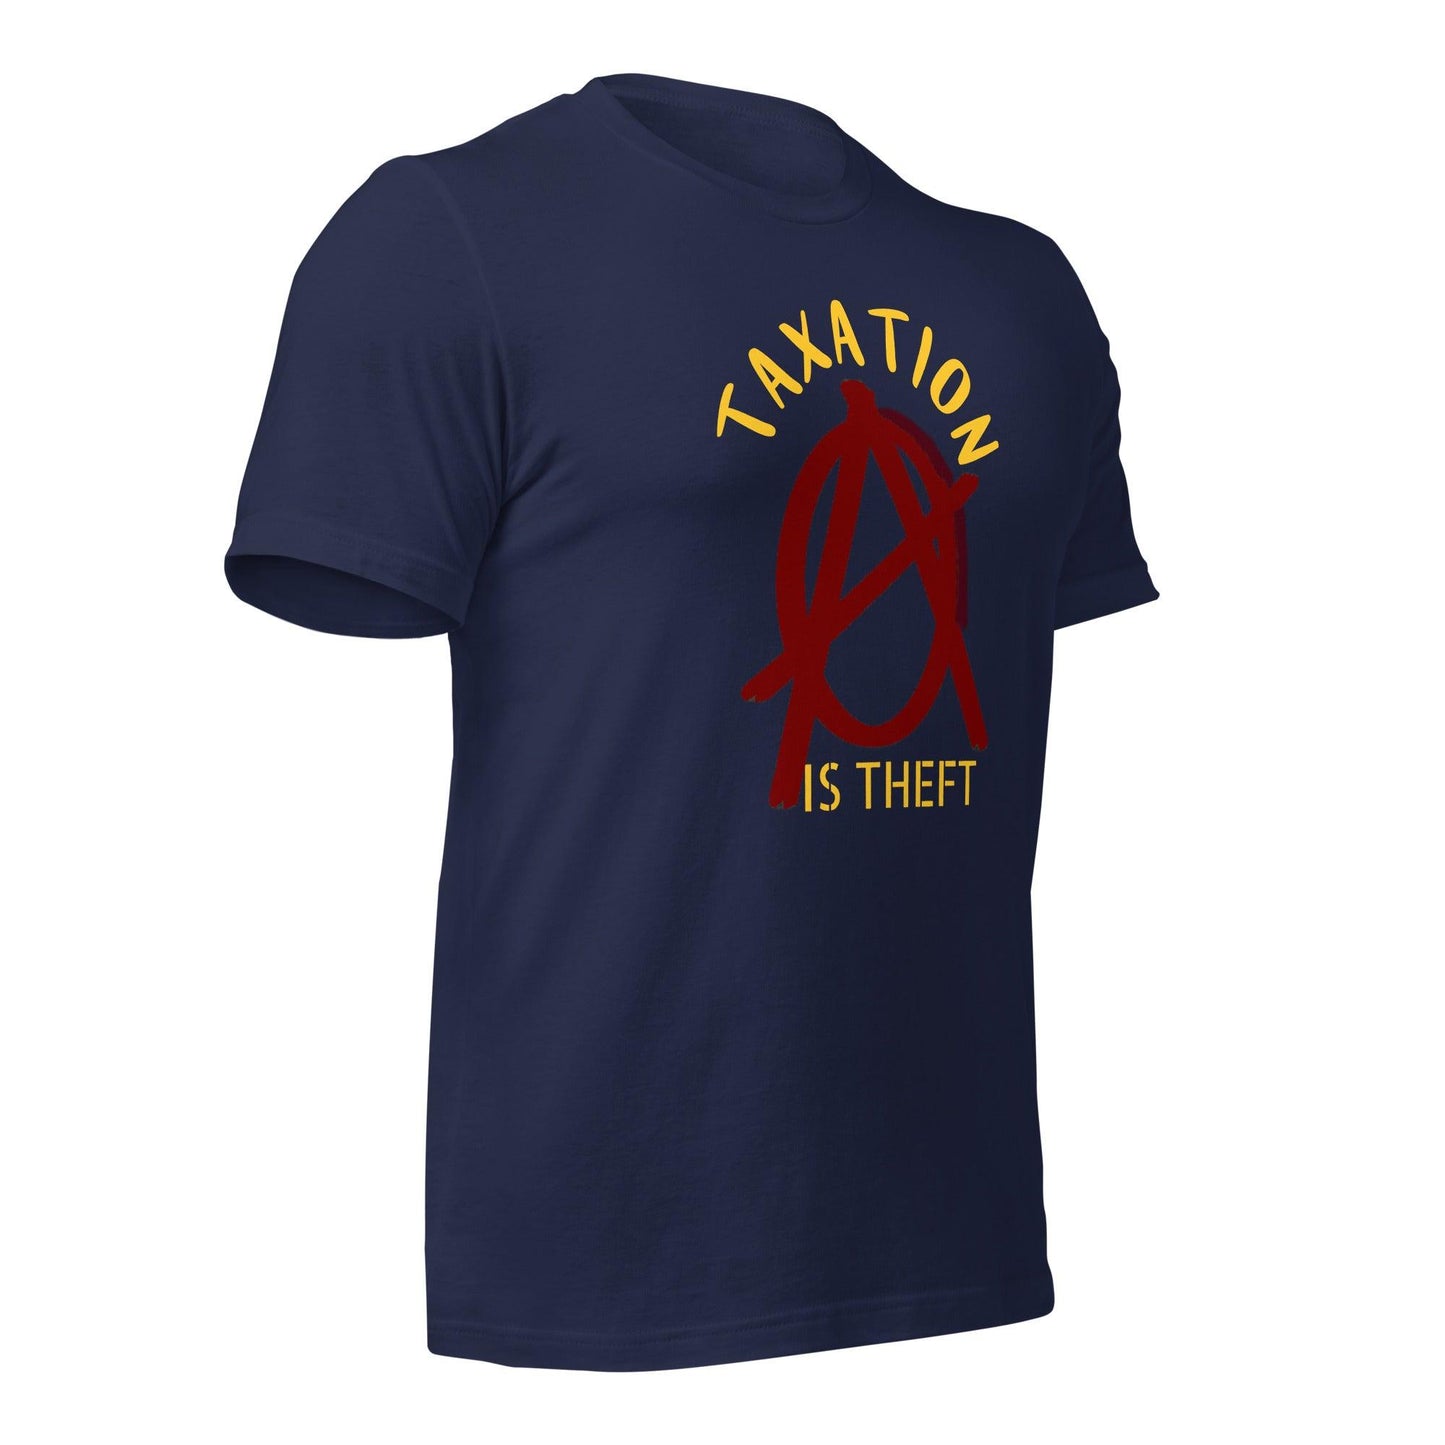 Anarchy Wear Red "Taxation Is Theft" Unisex t-shirt - AnarchyWear